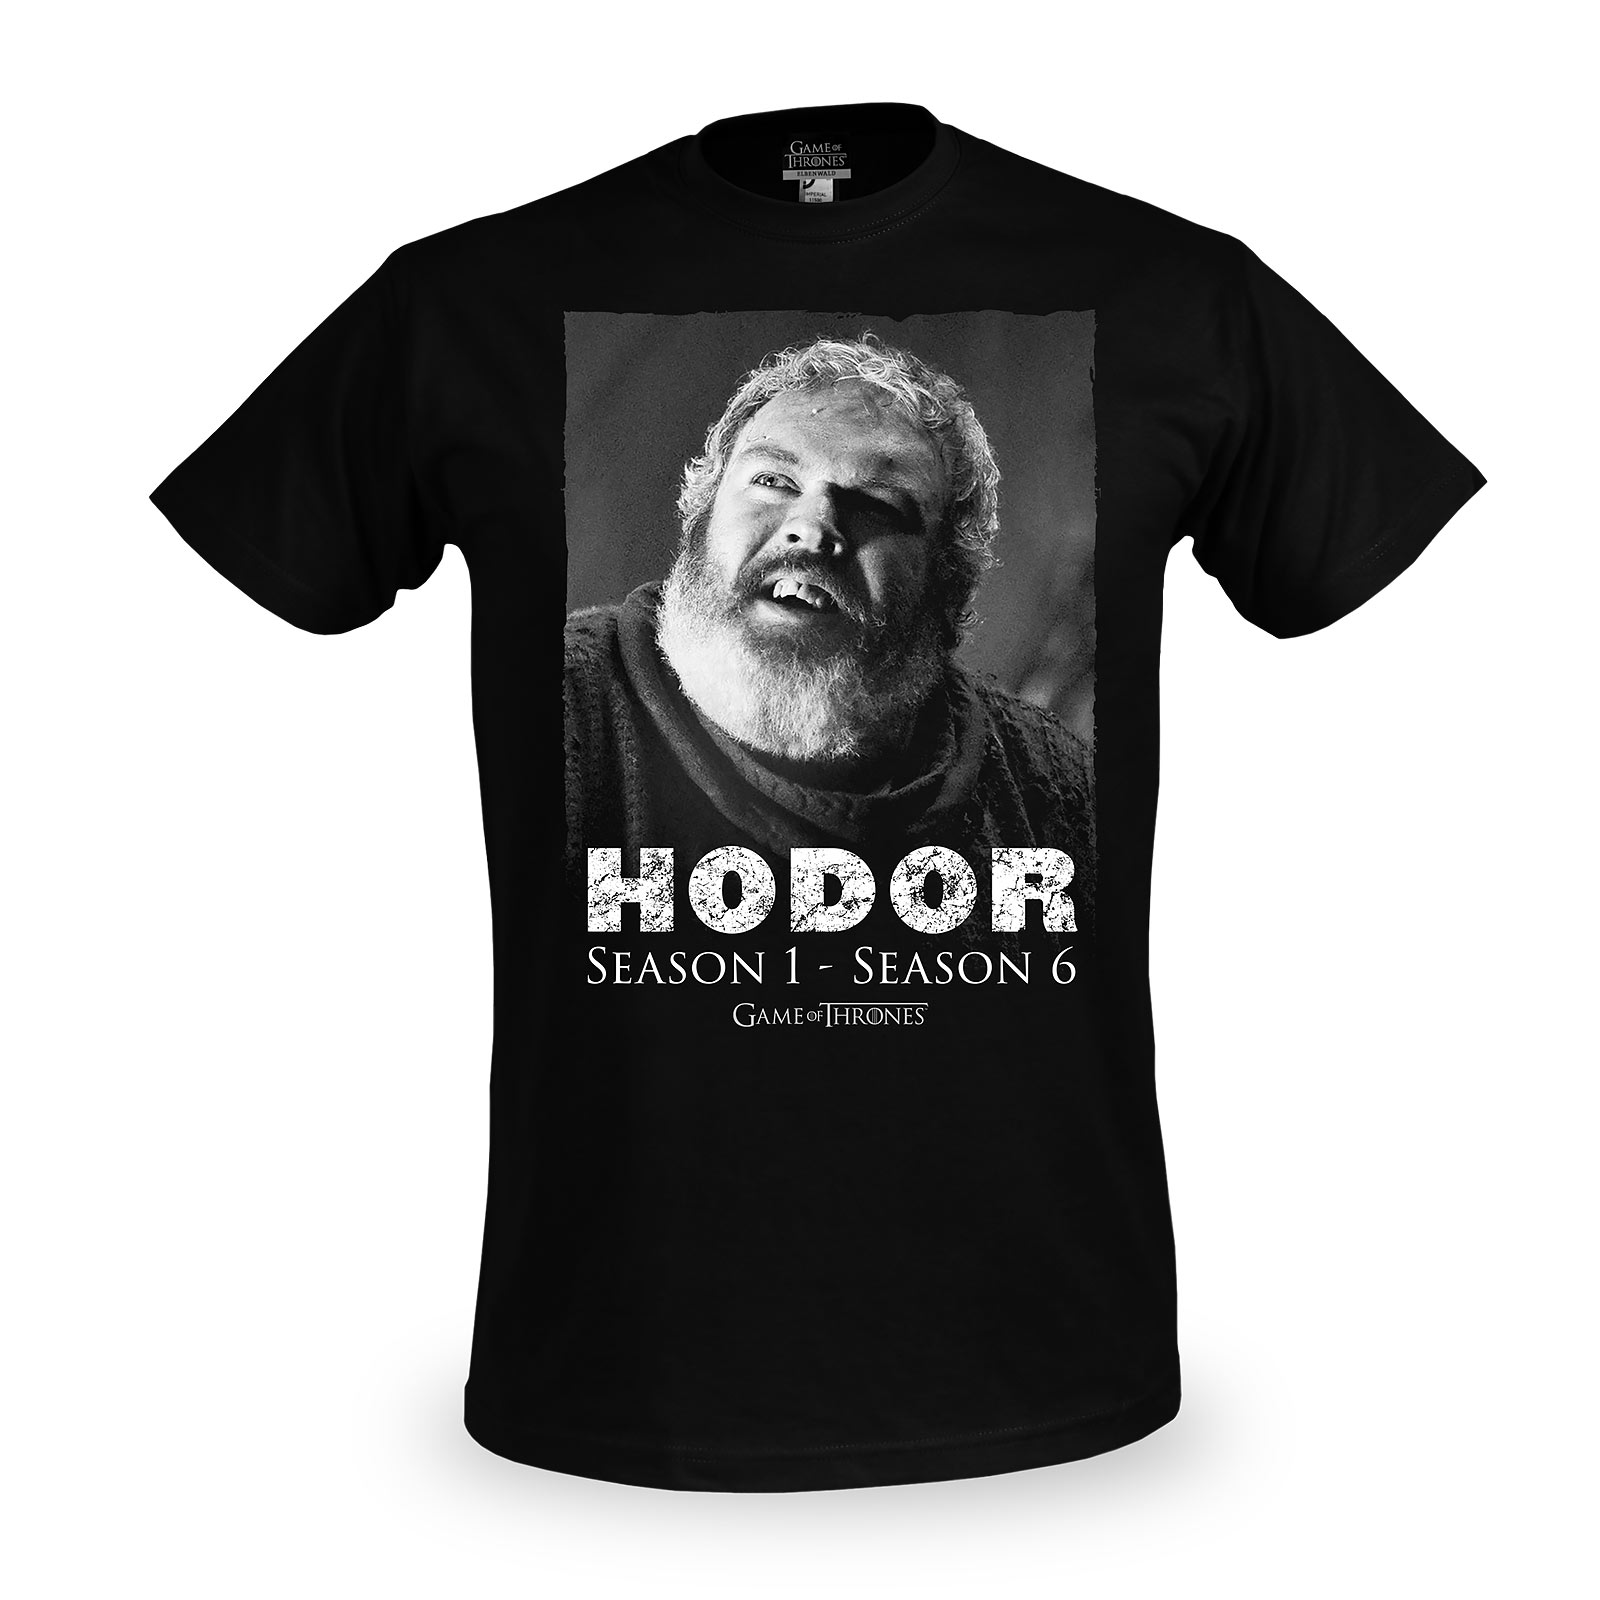 Game of Thrones - T-shirt Hodor Wylis